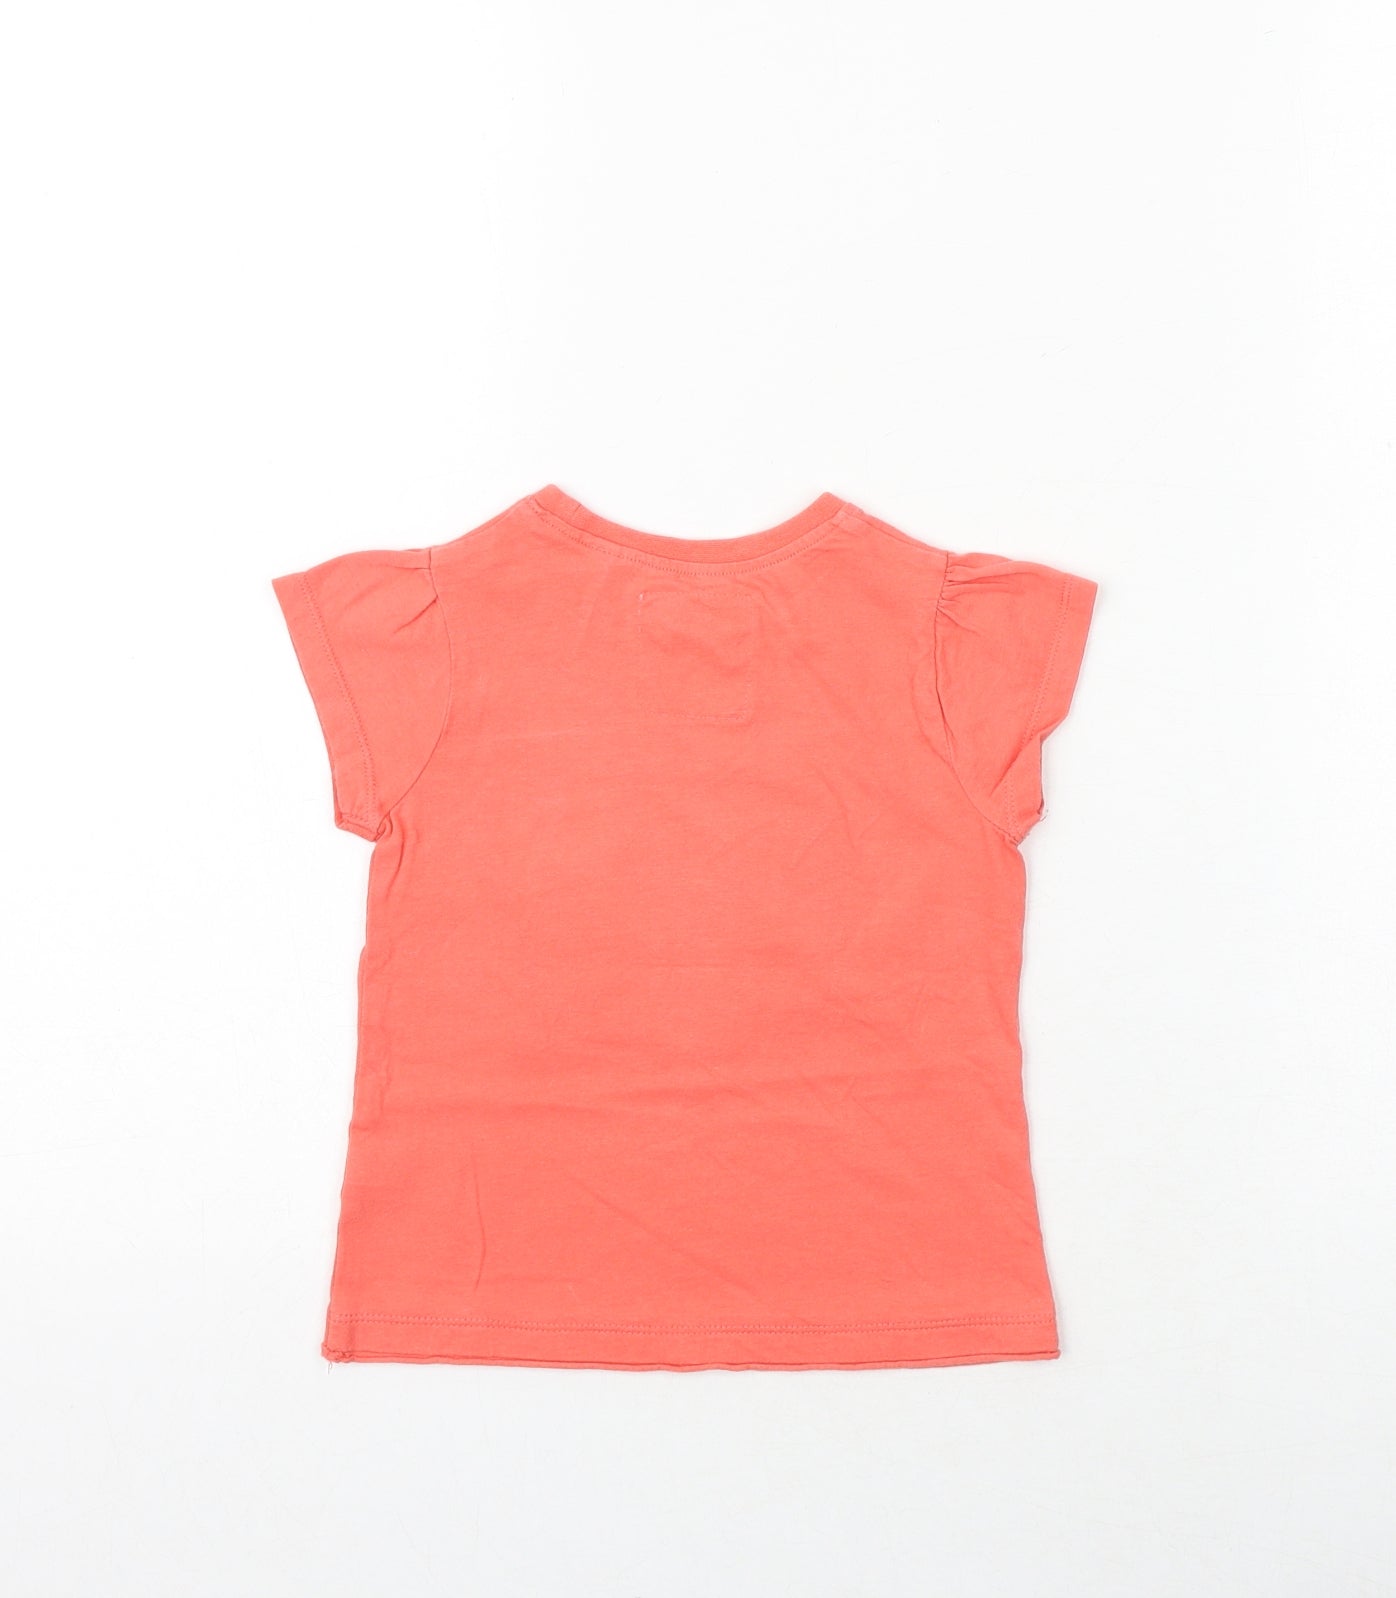 NEXT Girls Pink 100% Cotton Basic T-Shirt Size 2-3 Years Round Neck Pullover